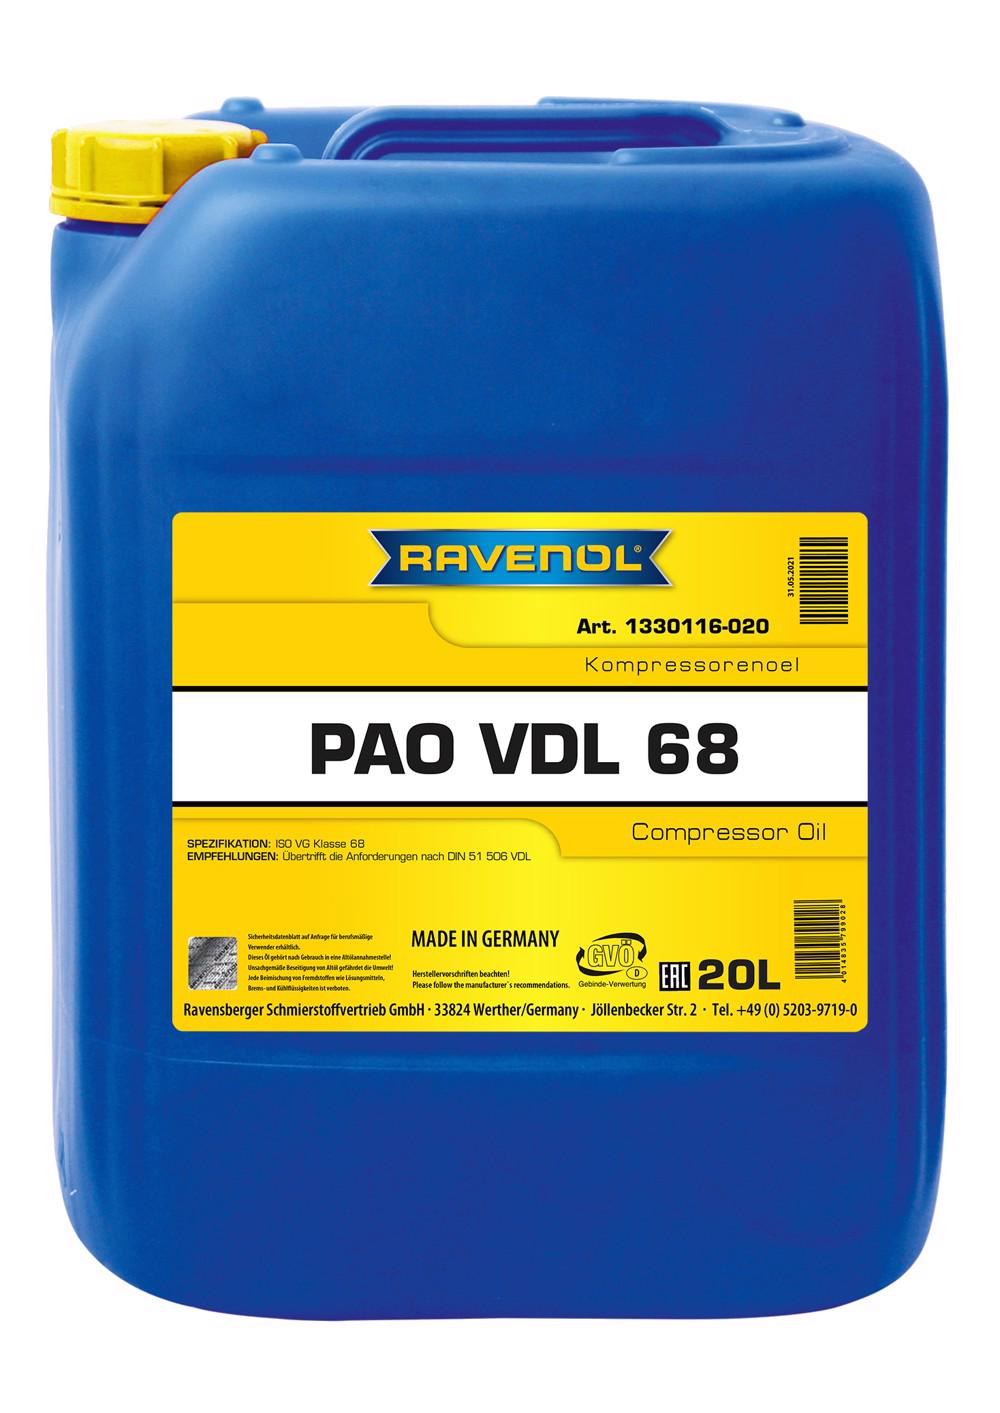 RAVENOL Kompressorenoel PAO VDL 68